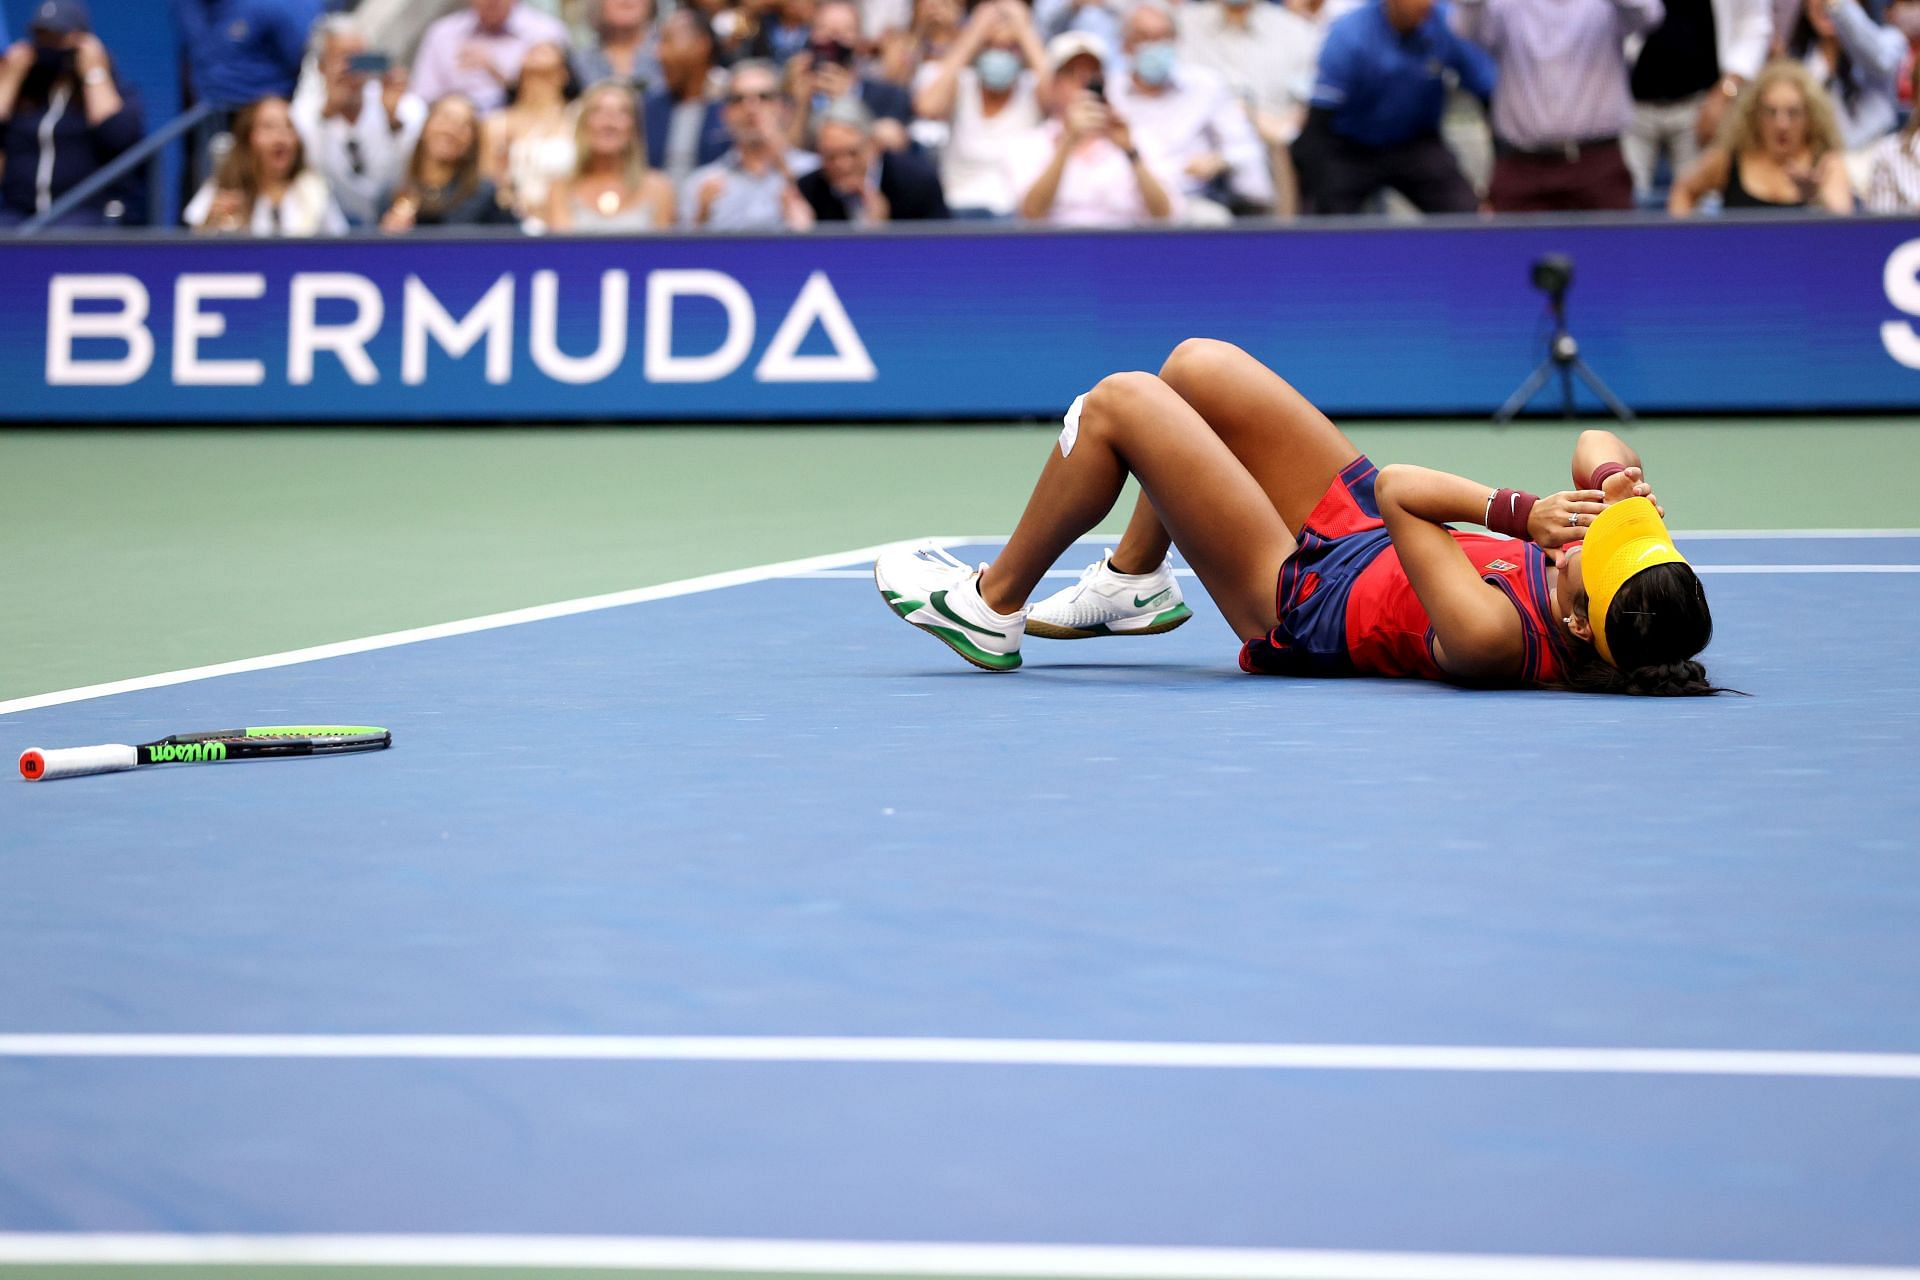 Emma Raducanu after winning the 2021 US Open.